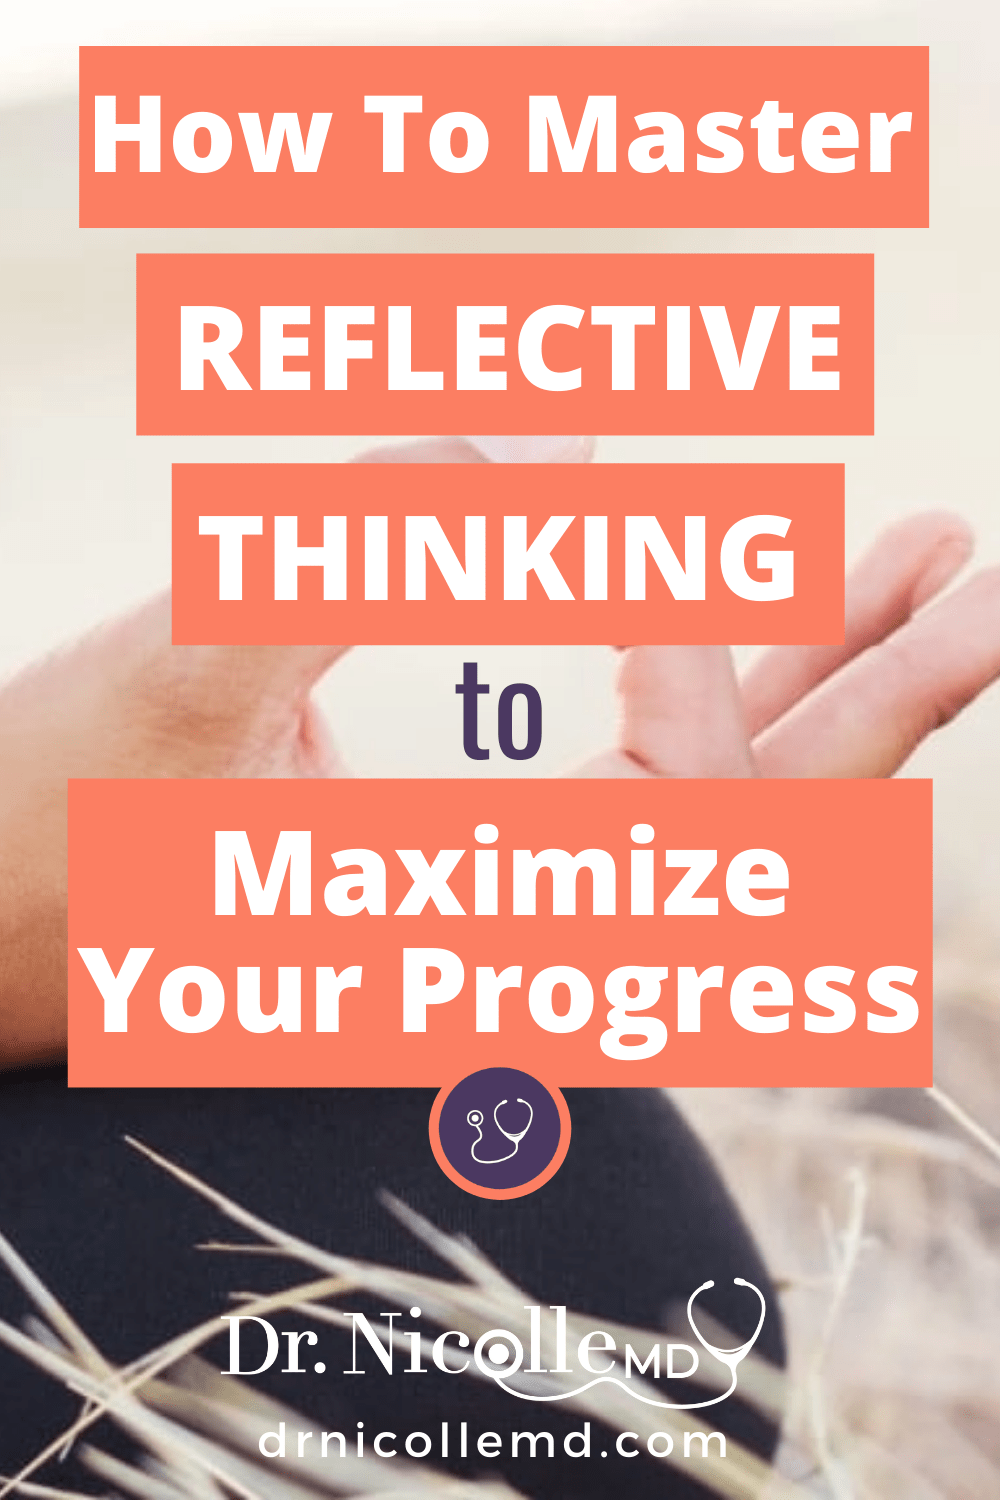 How To Master Reflective Thinking to Maximize Your Progress